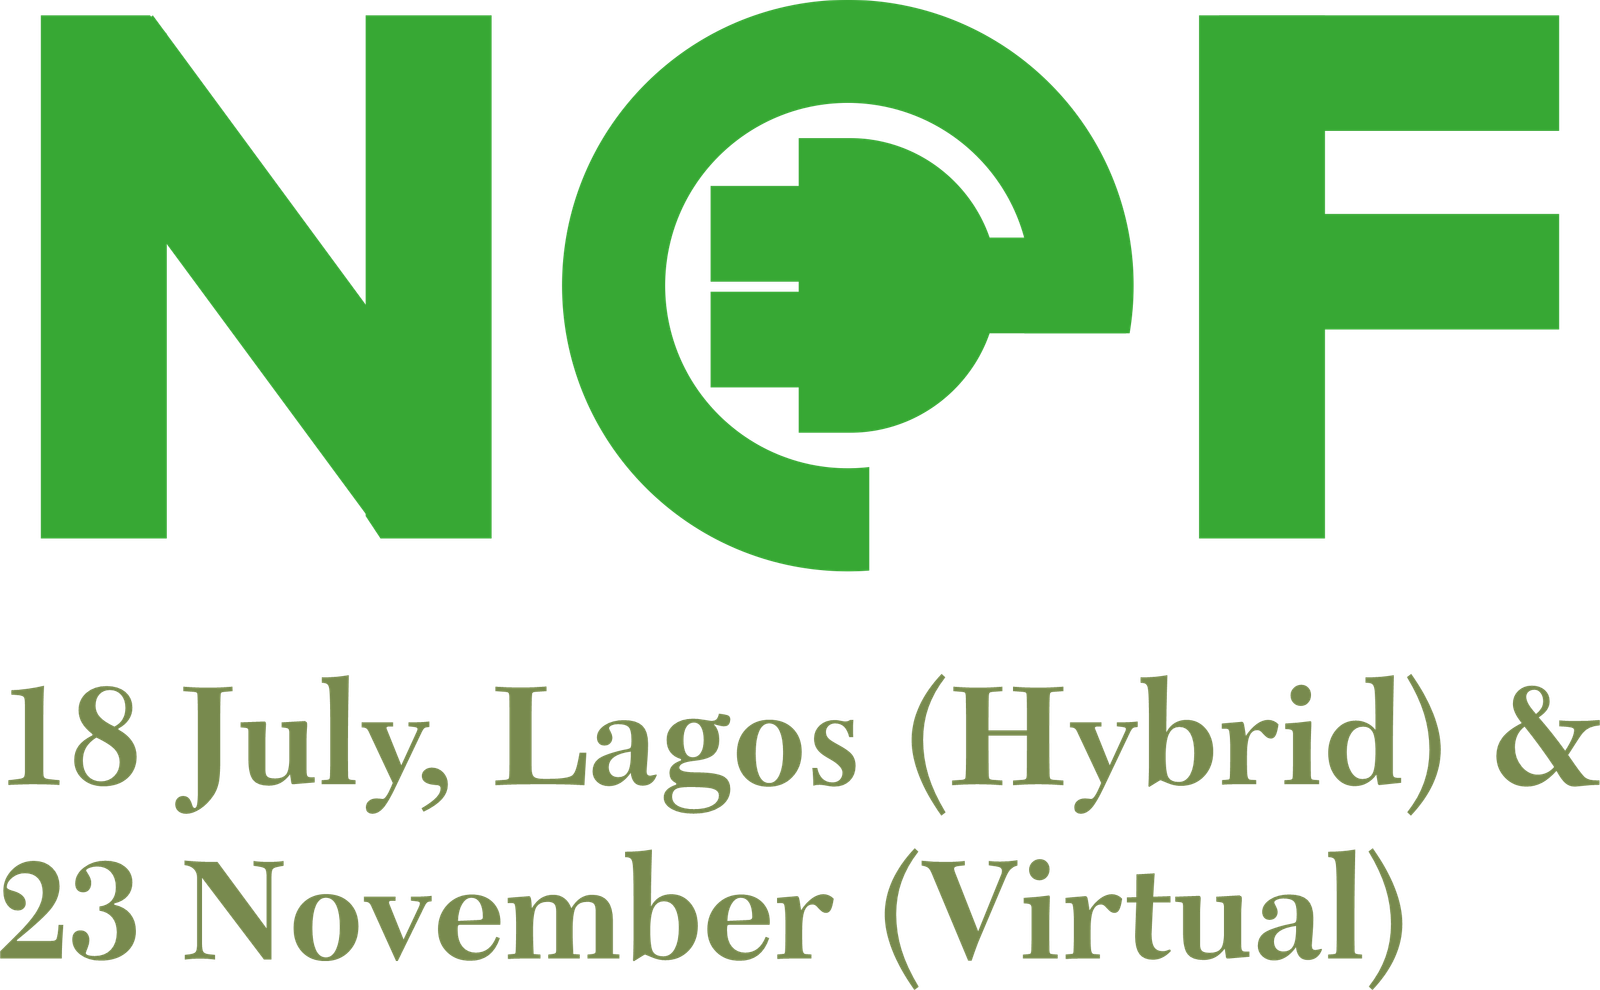 The Nigeria Energy Forum